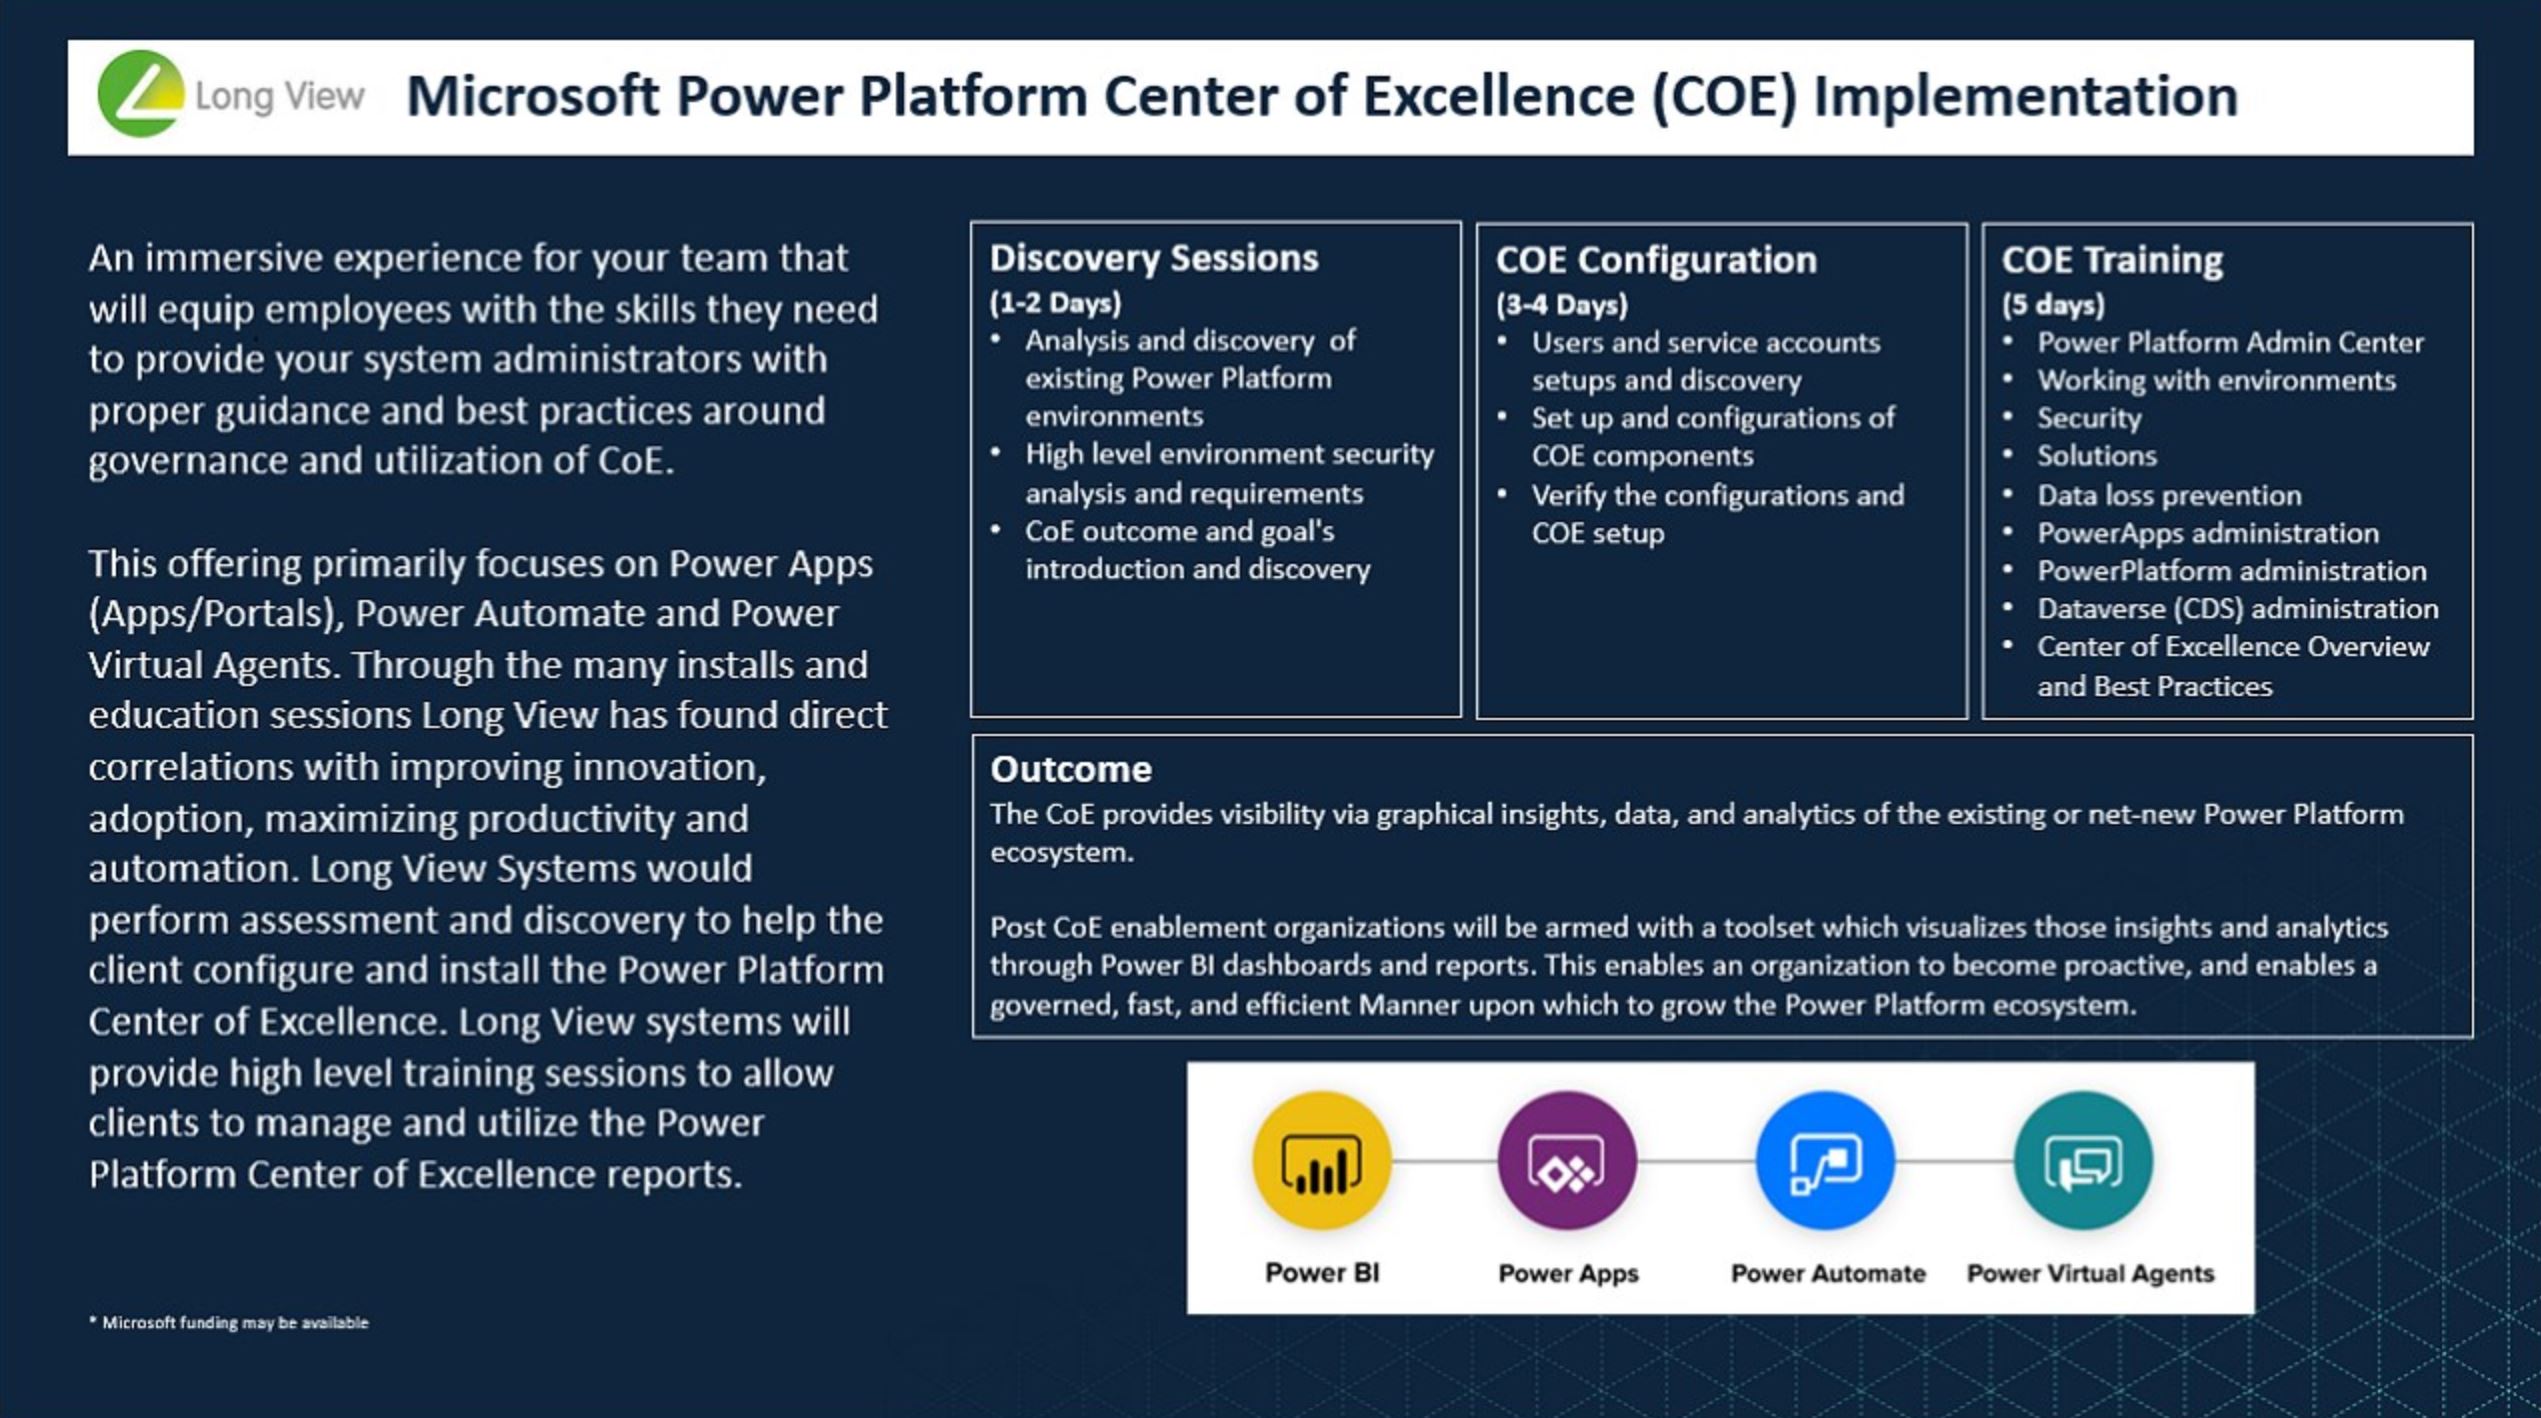 Microsoft Power Platform Center of Excellence Implementation